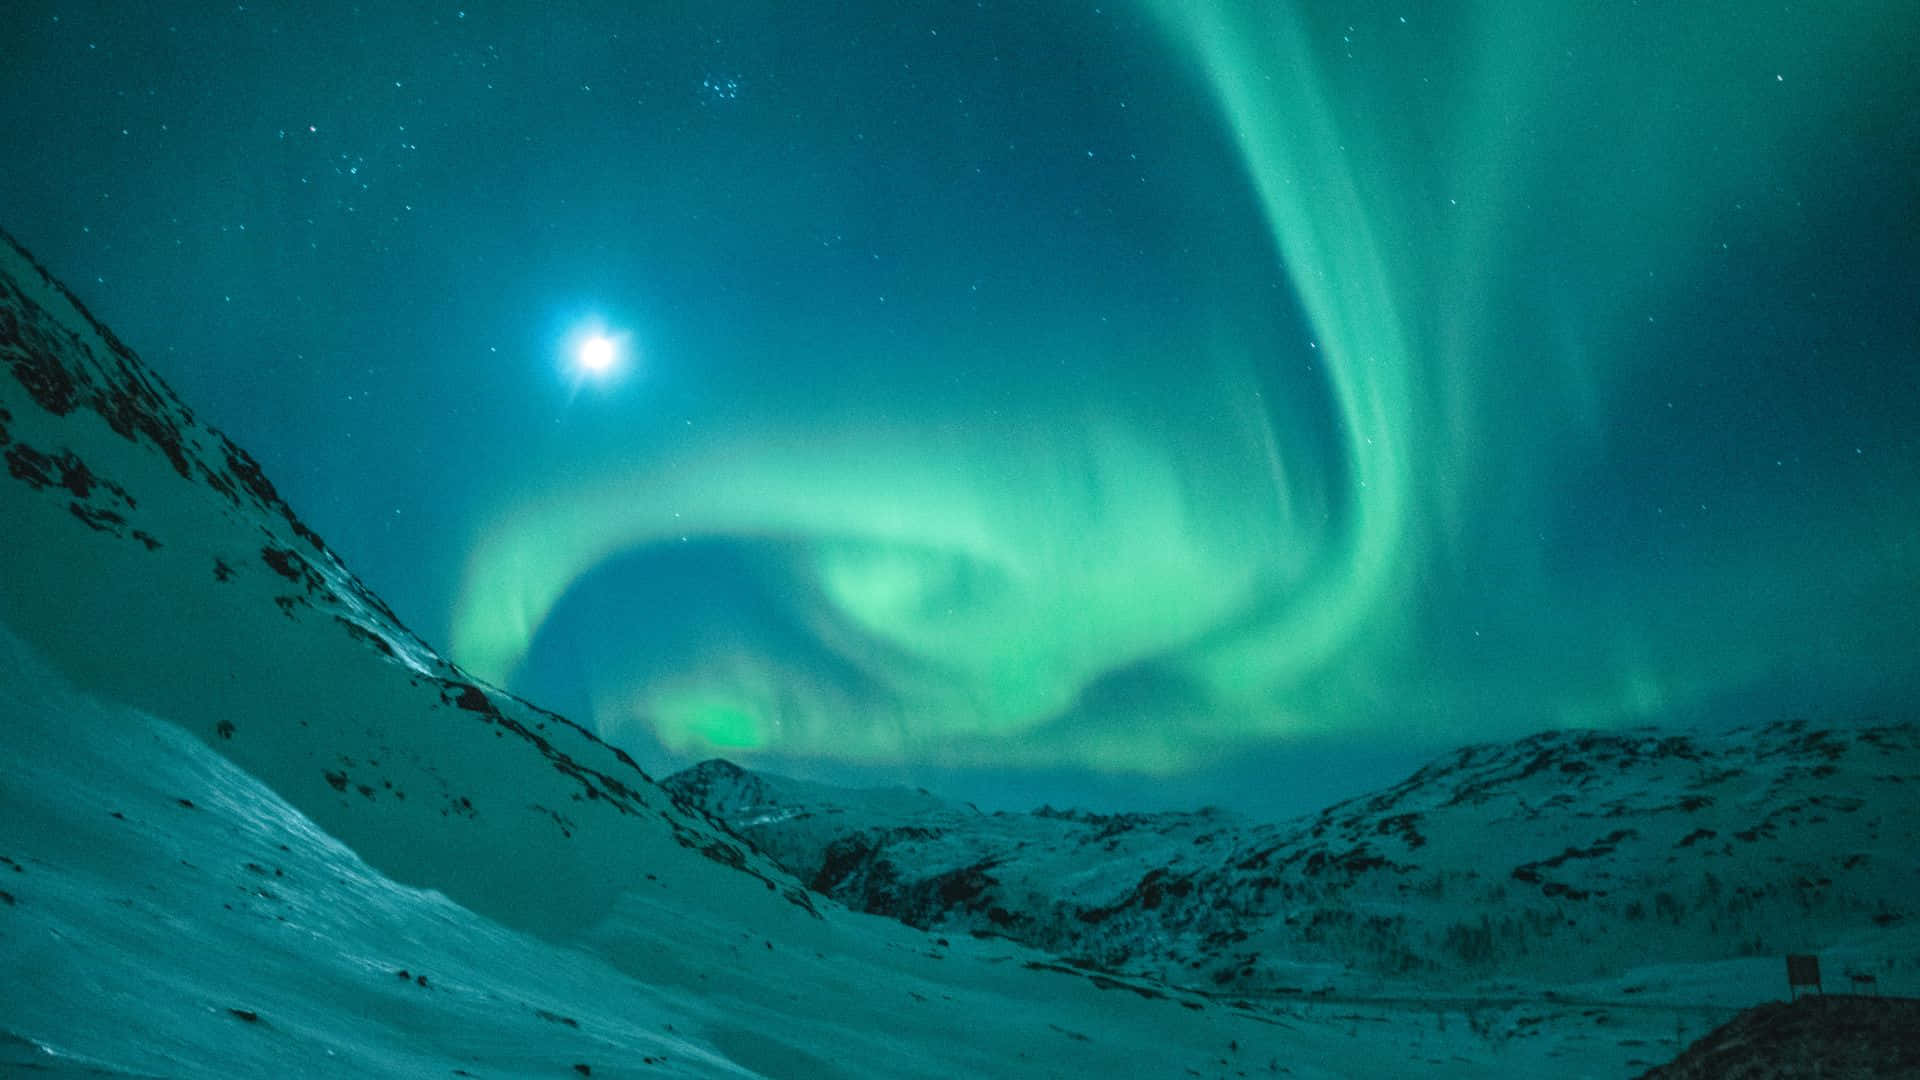 Magical Night Sky - The Stunning Aurora Borealis Wallpaper